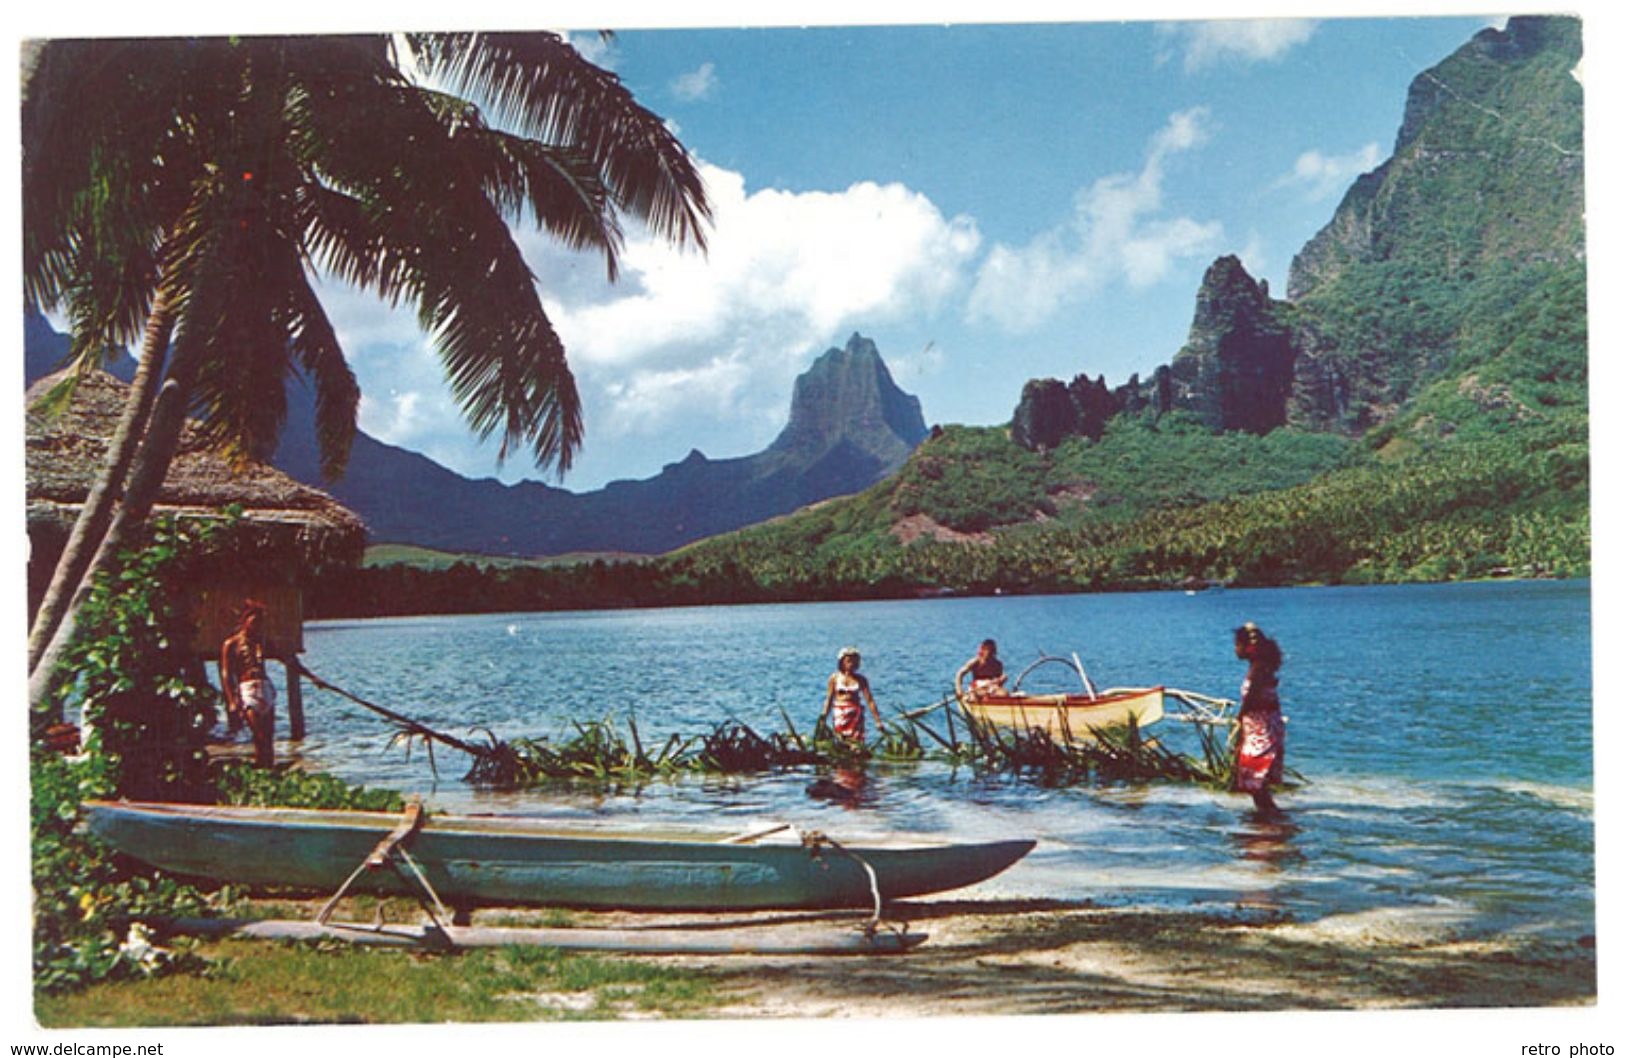 10 Cpm / Cpsm Tahiti - Danseuse, costumes, Bora-Bora, Papeete, fêtes, Mooréa, port ...